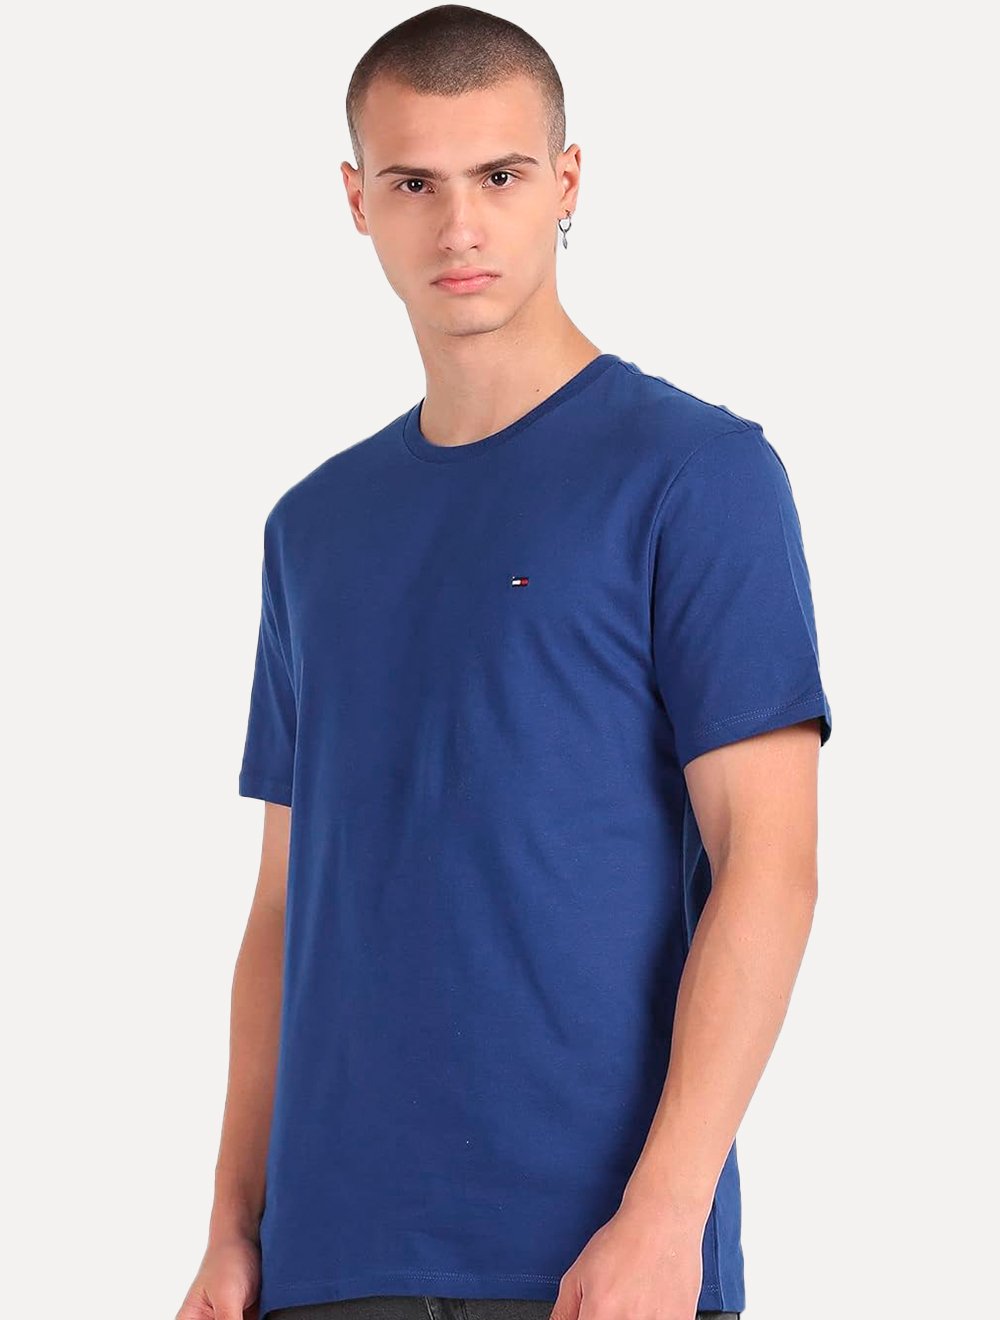 T-Shirt Tommy Hilfiger Knit Azul - Tommy Hilfiger